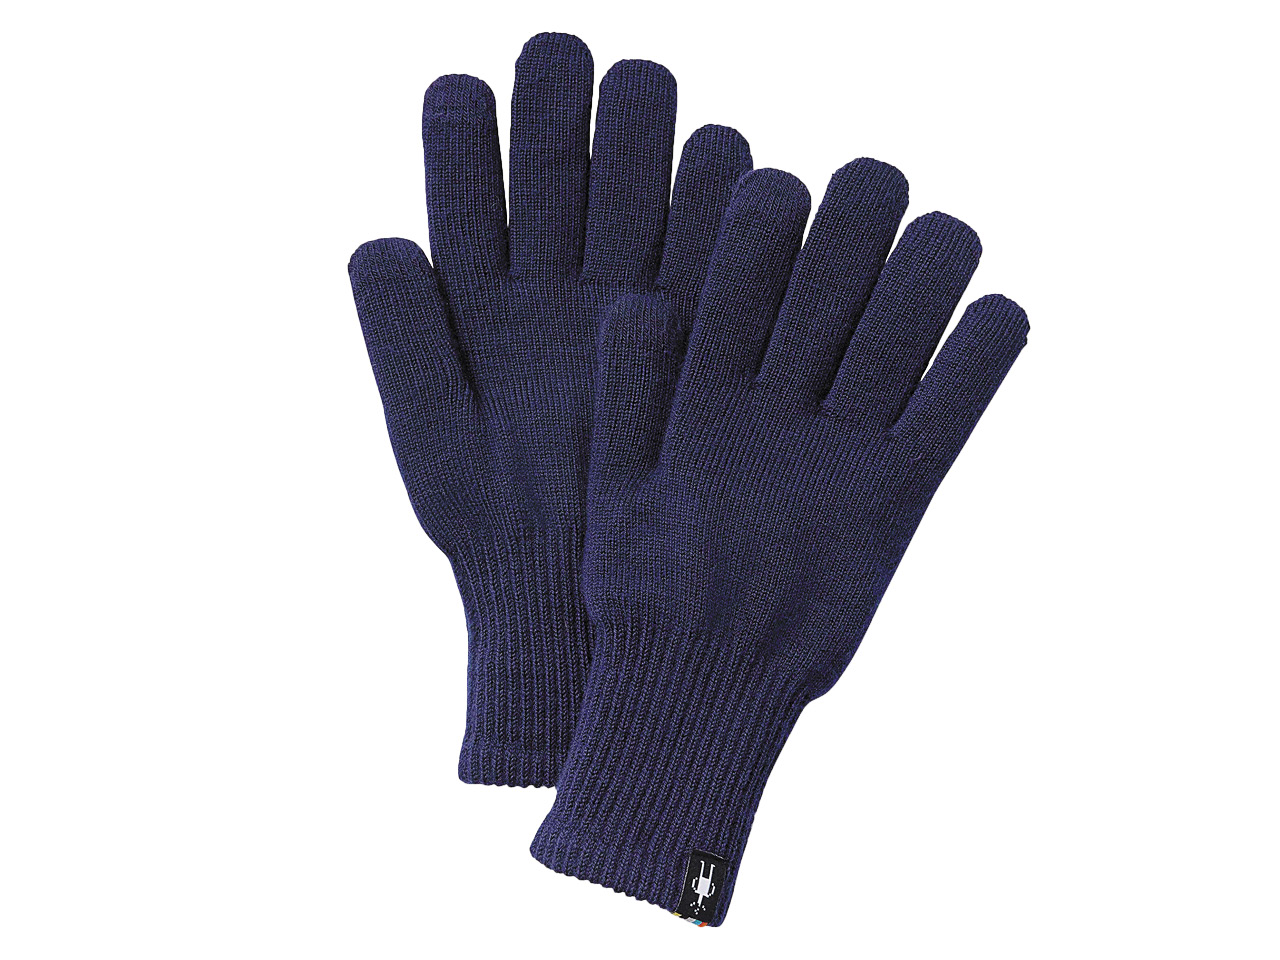 Navy Smartwool gloves.